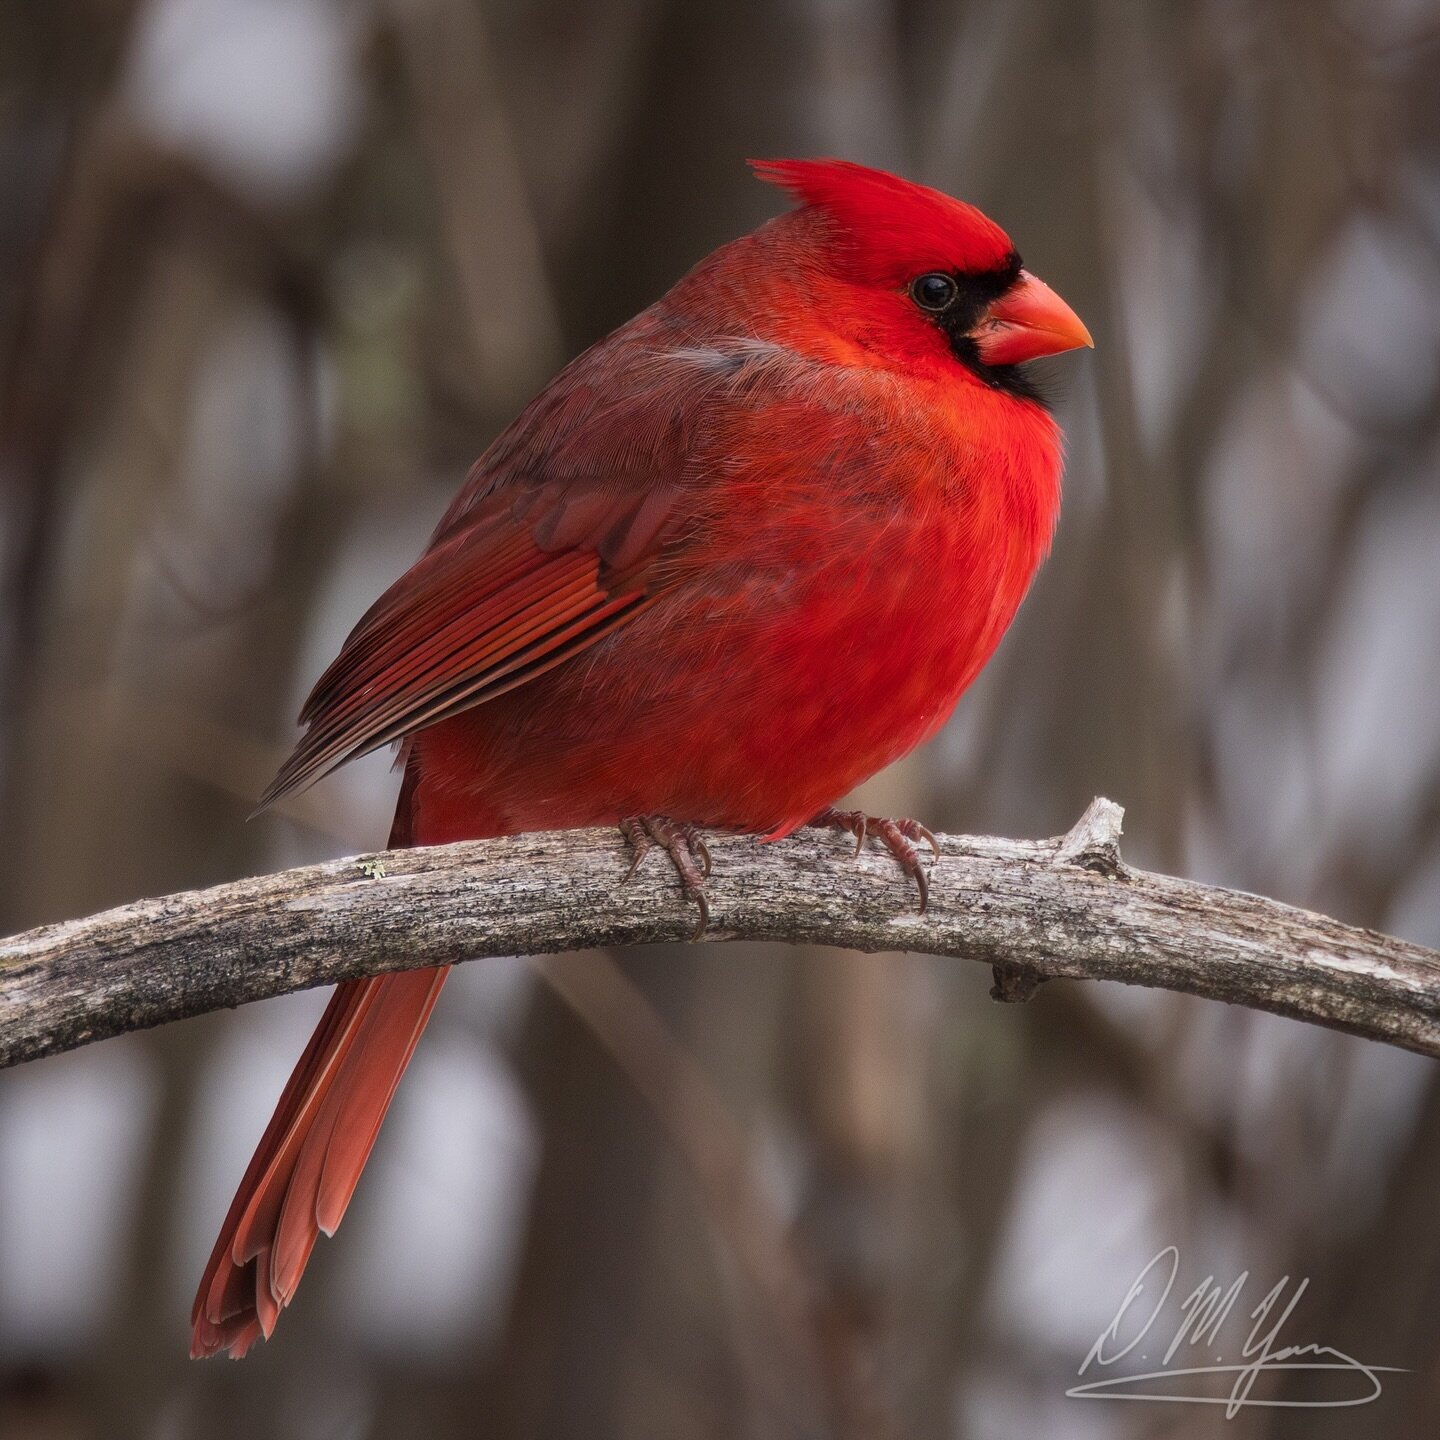 Beautiful male Northern Cardinal in a snowy field yesterday morning. 
_____
#northerncardinal #cardinal #birds #wildbirds #bestbirdshots #birdlovers #birding #birdphotography #birdingphotography #birder #birdsofinstagram #birdwatching #feather_perfec